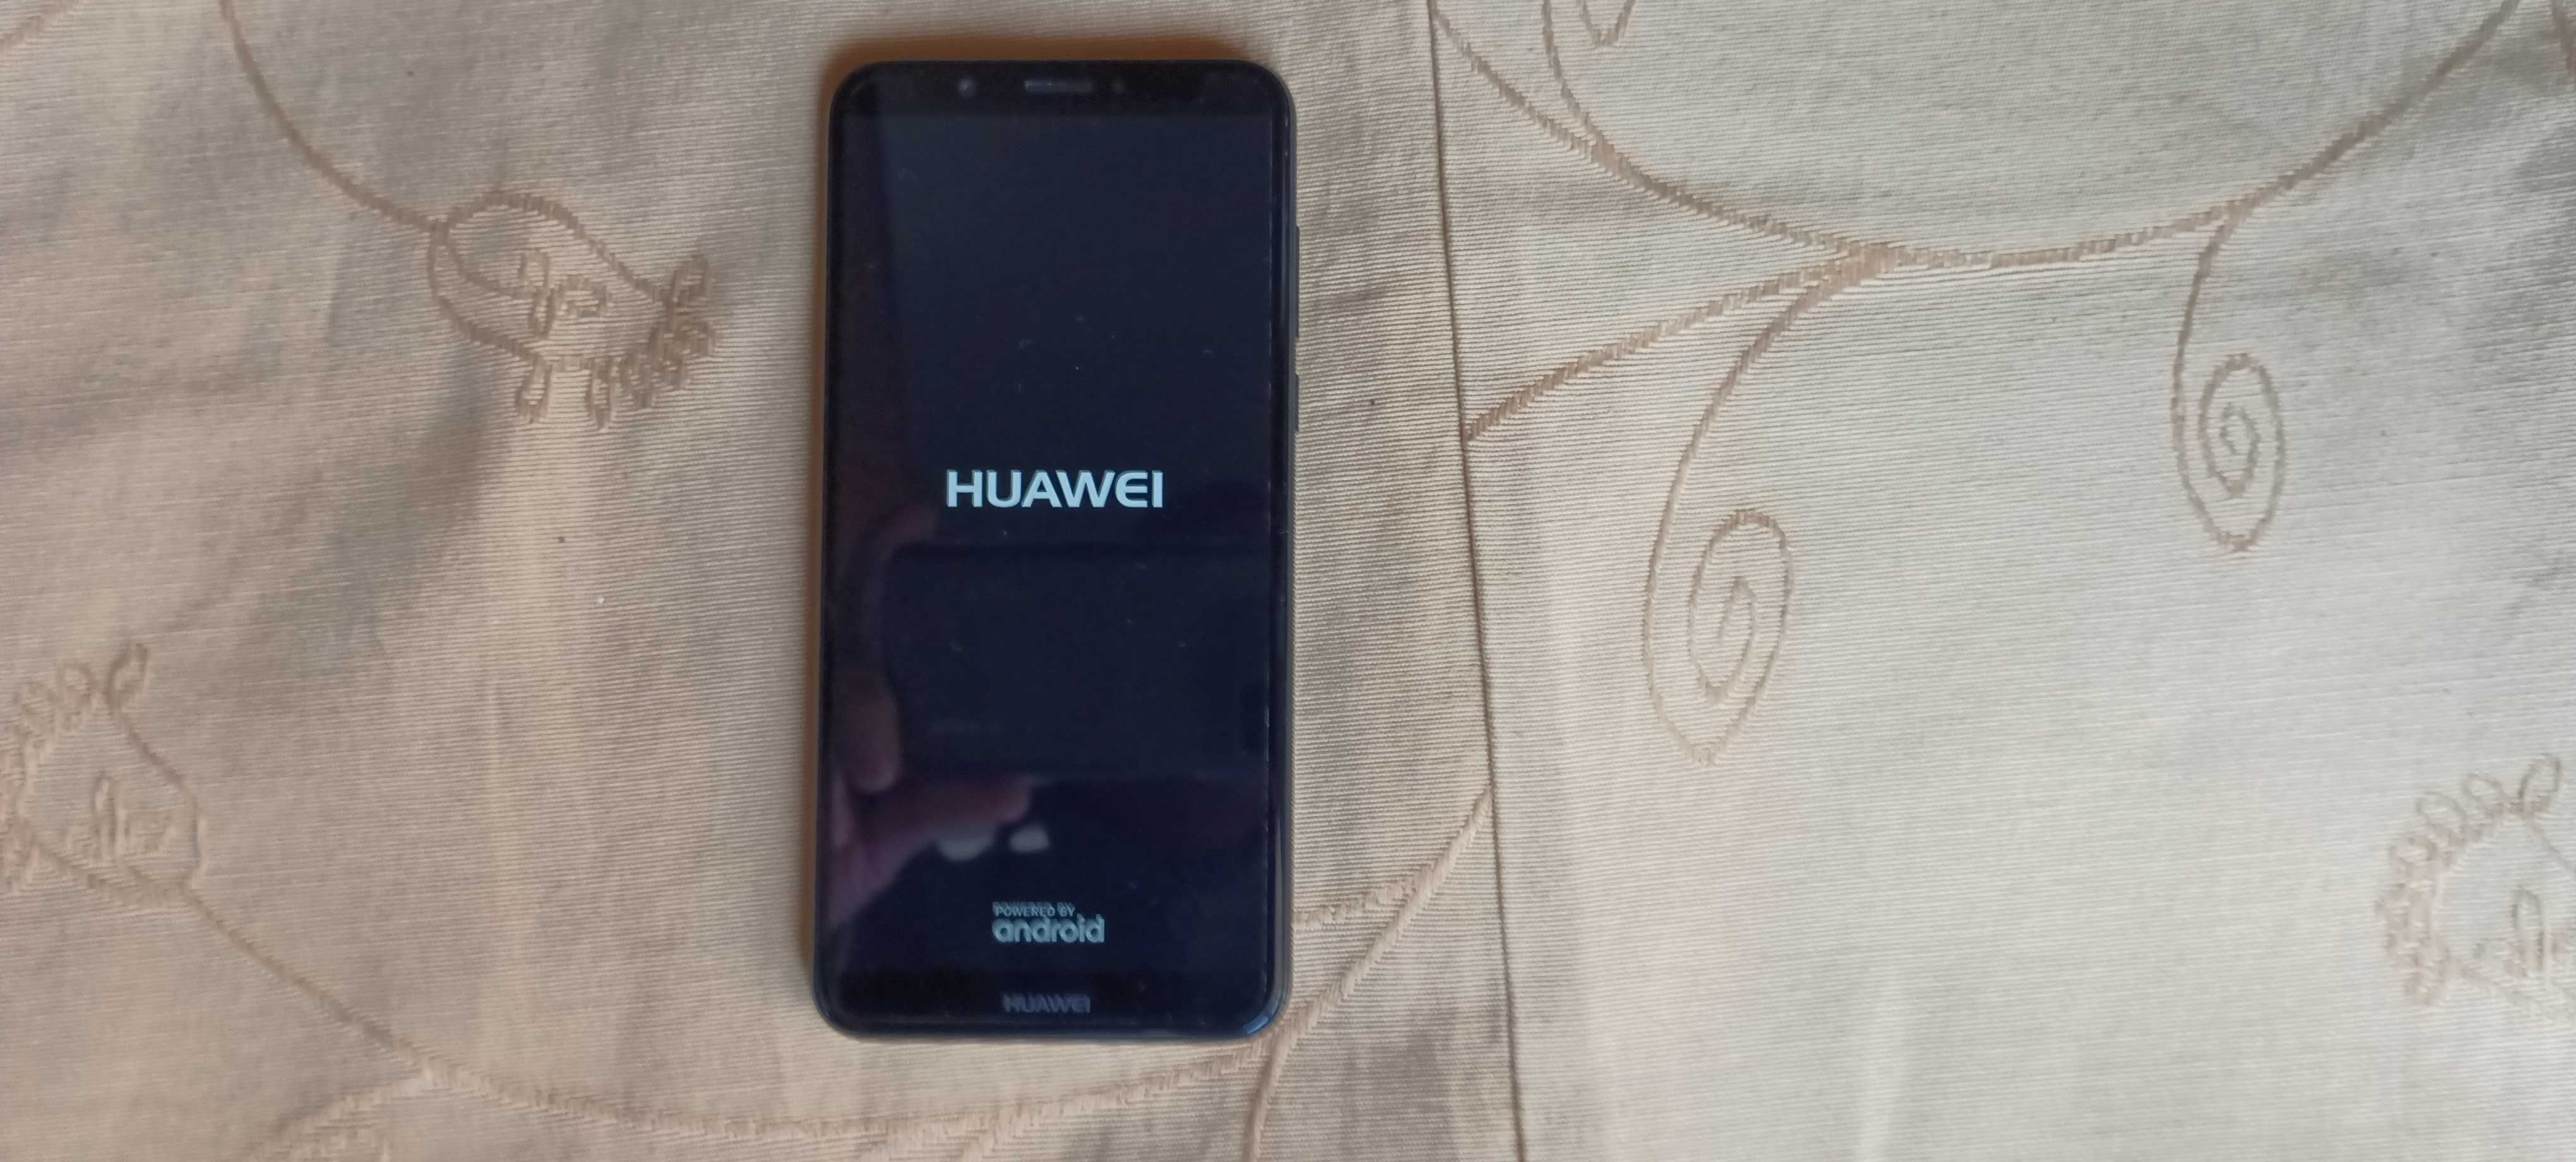 Huawei Y7 2018 como novo